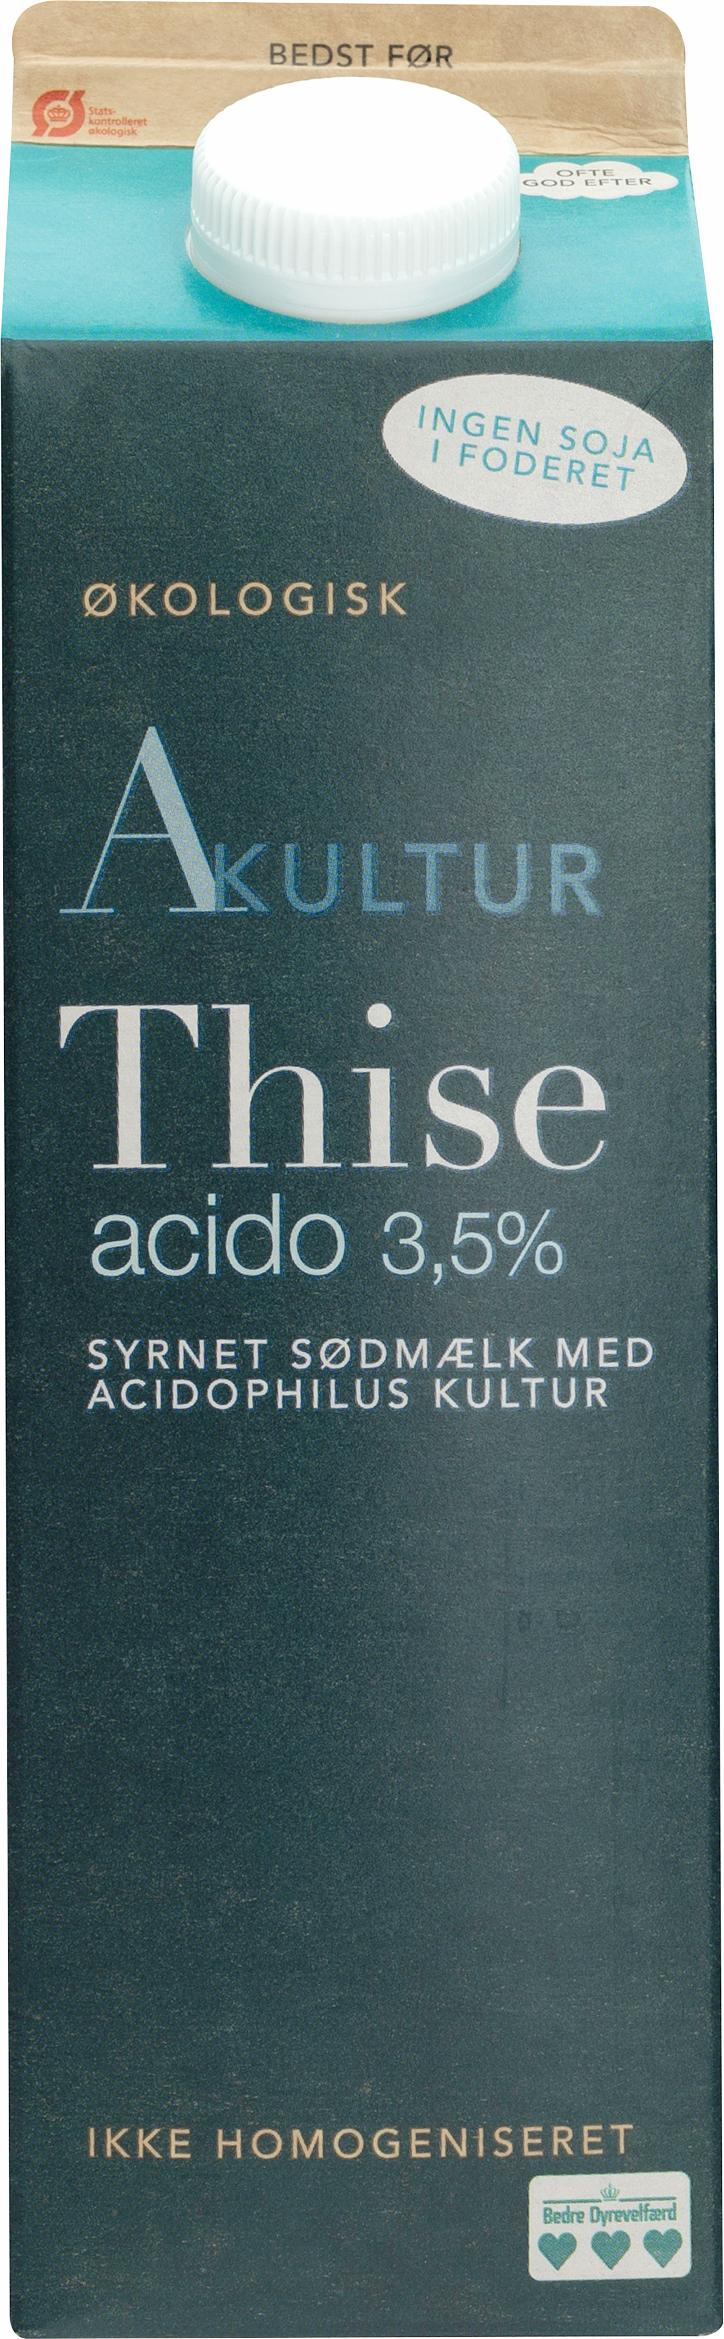 Thise Akultur Acido 3,5% 1000g